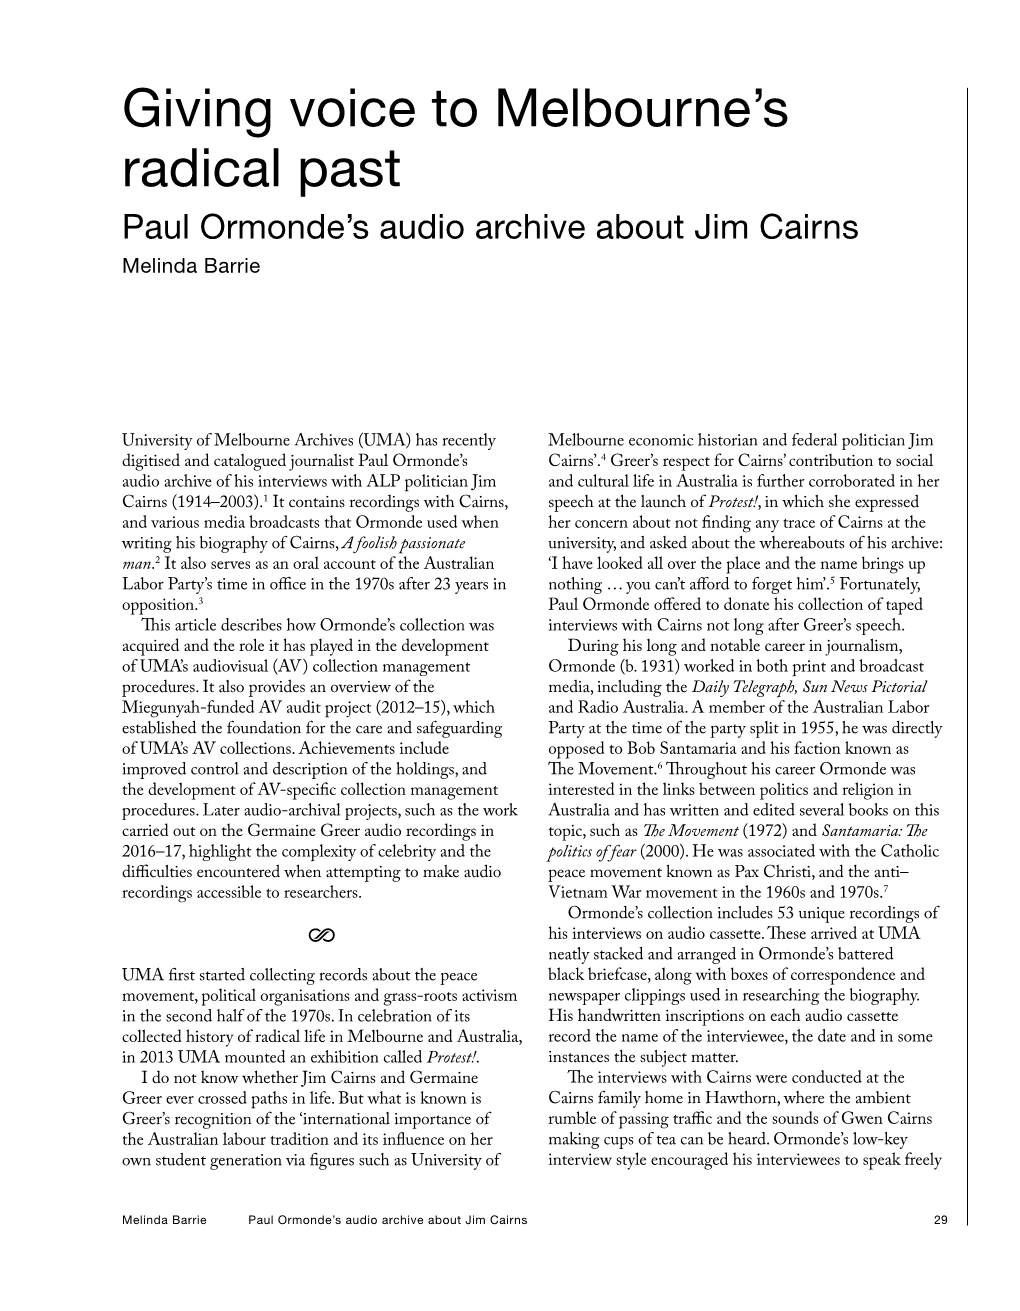 Paul Ormonde's Audio Archive About Jim Cairns Melinda Barrie